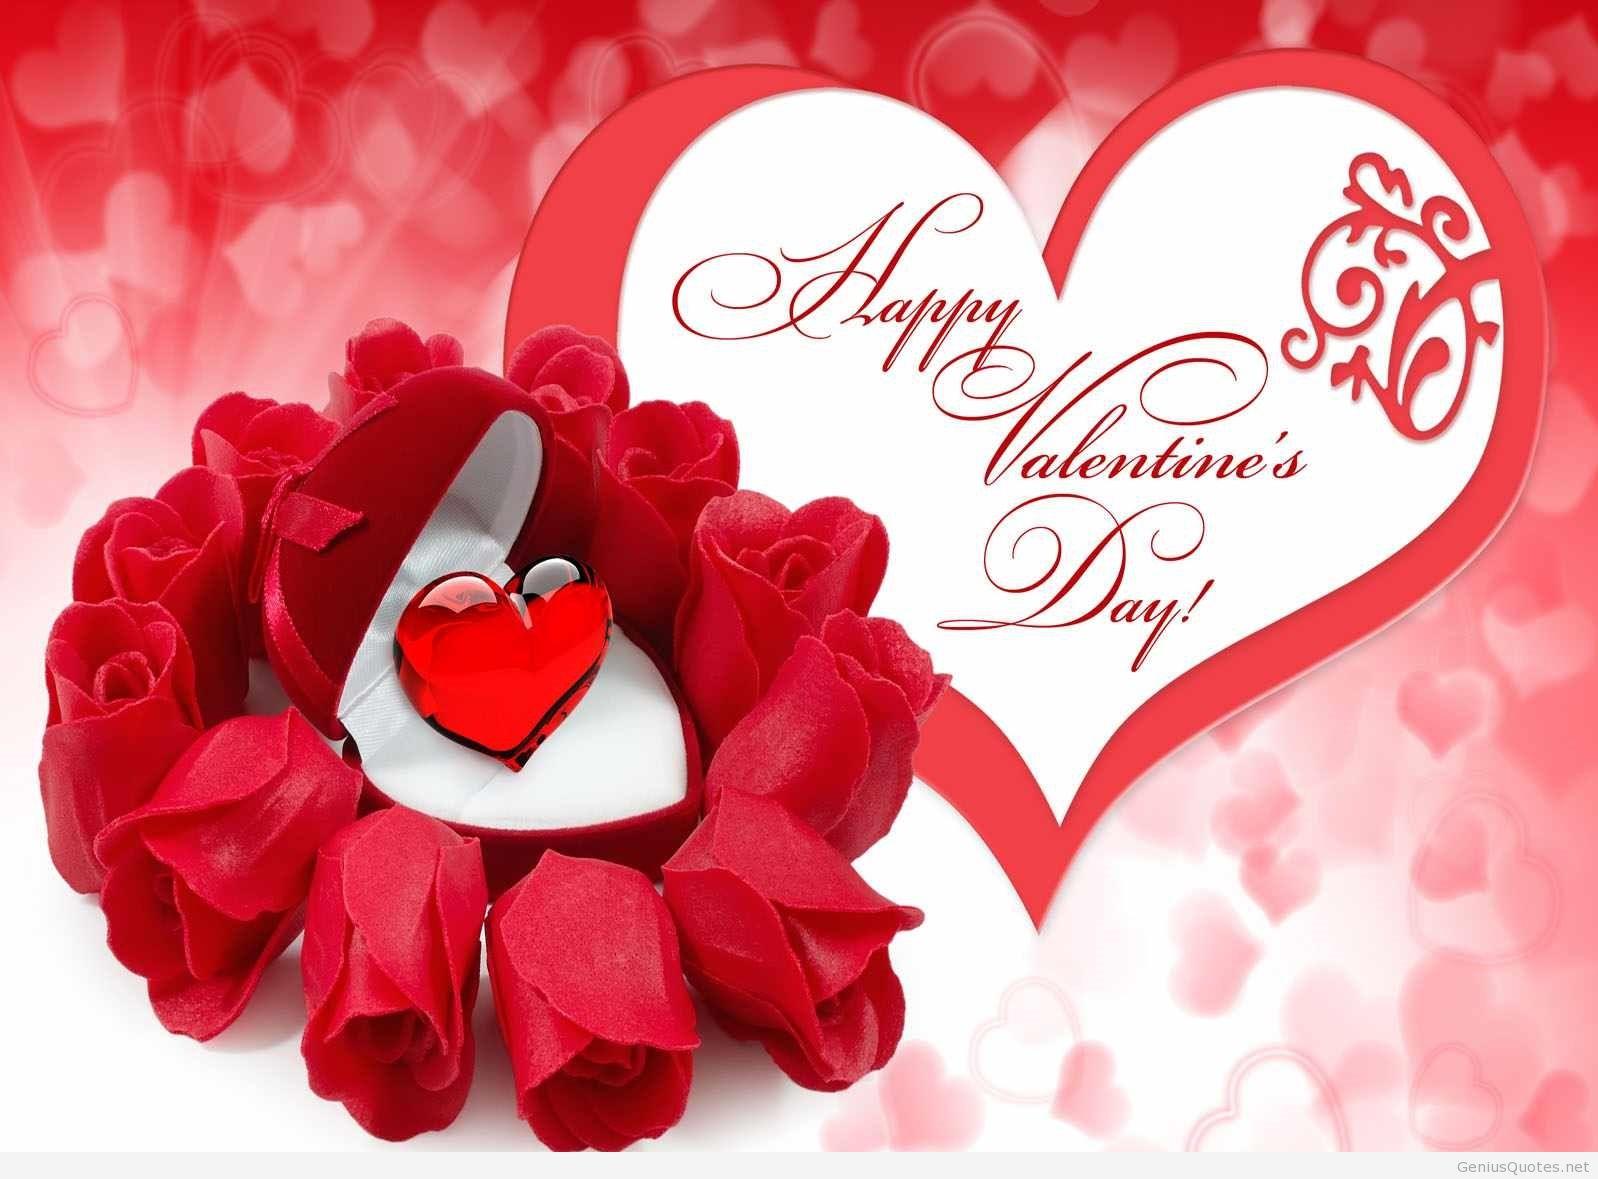 Love Valentines day wallpaper 2014